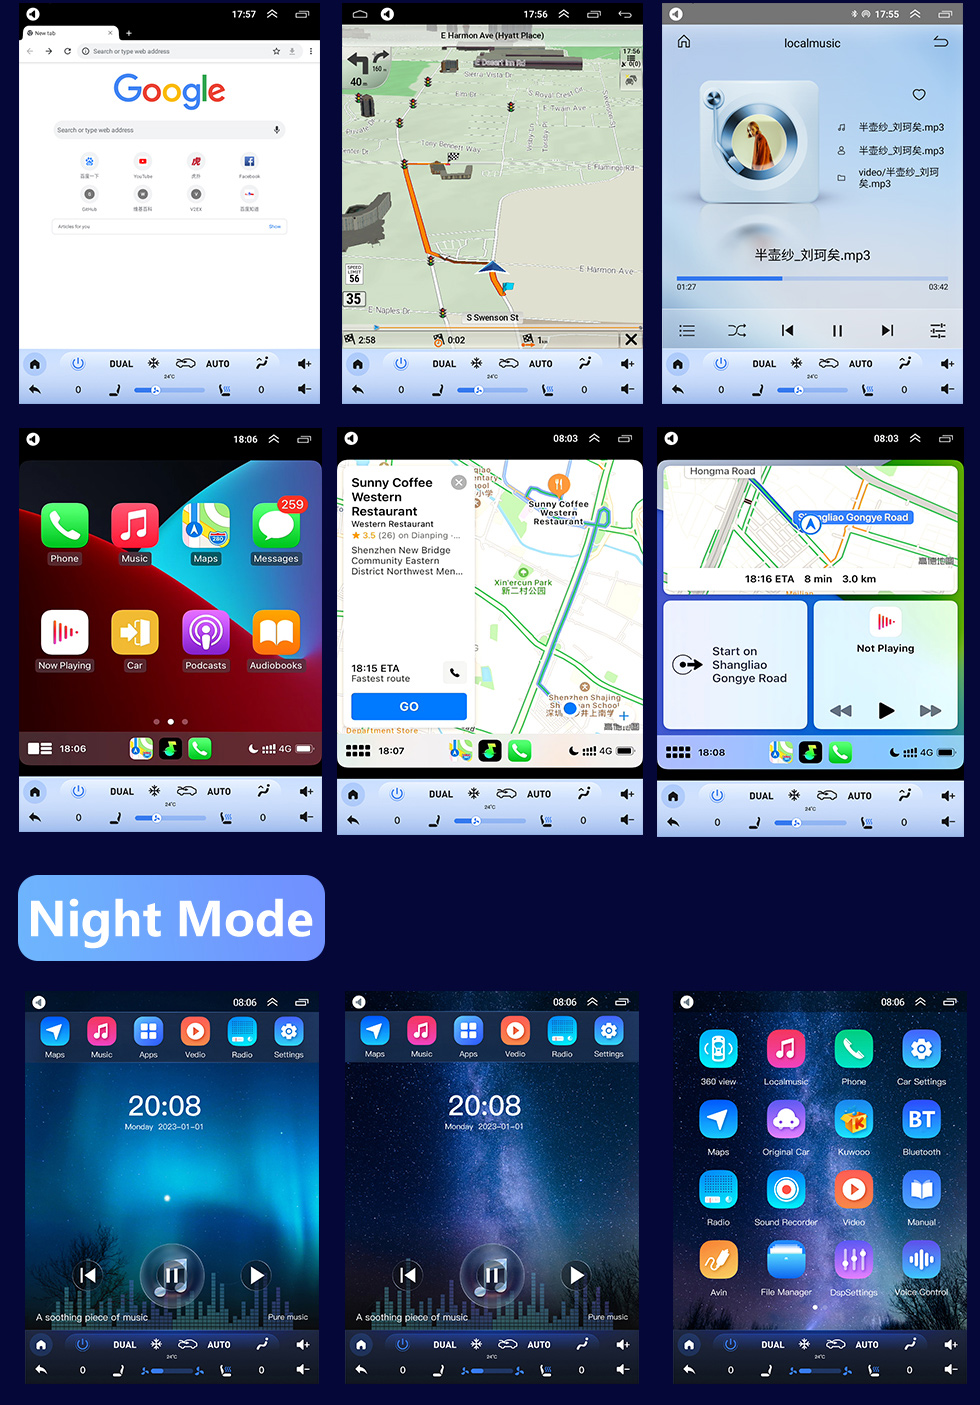 Seicane OEM Android 10.0 für 2007-2012 Honda CRV Radio Stereo Audio mit 9,7 Zoll HD Touchscreen GPS Navigationssystem Carplay Unterstützung AHD Rückfahrkamera Lenkradsteuerung